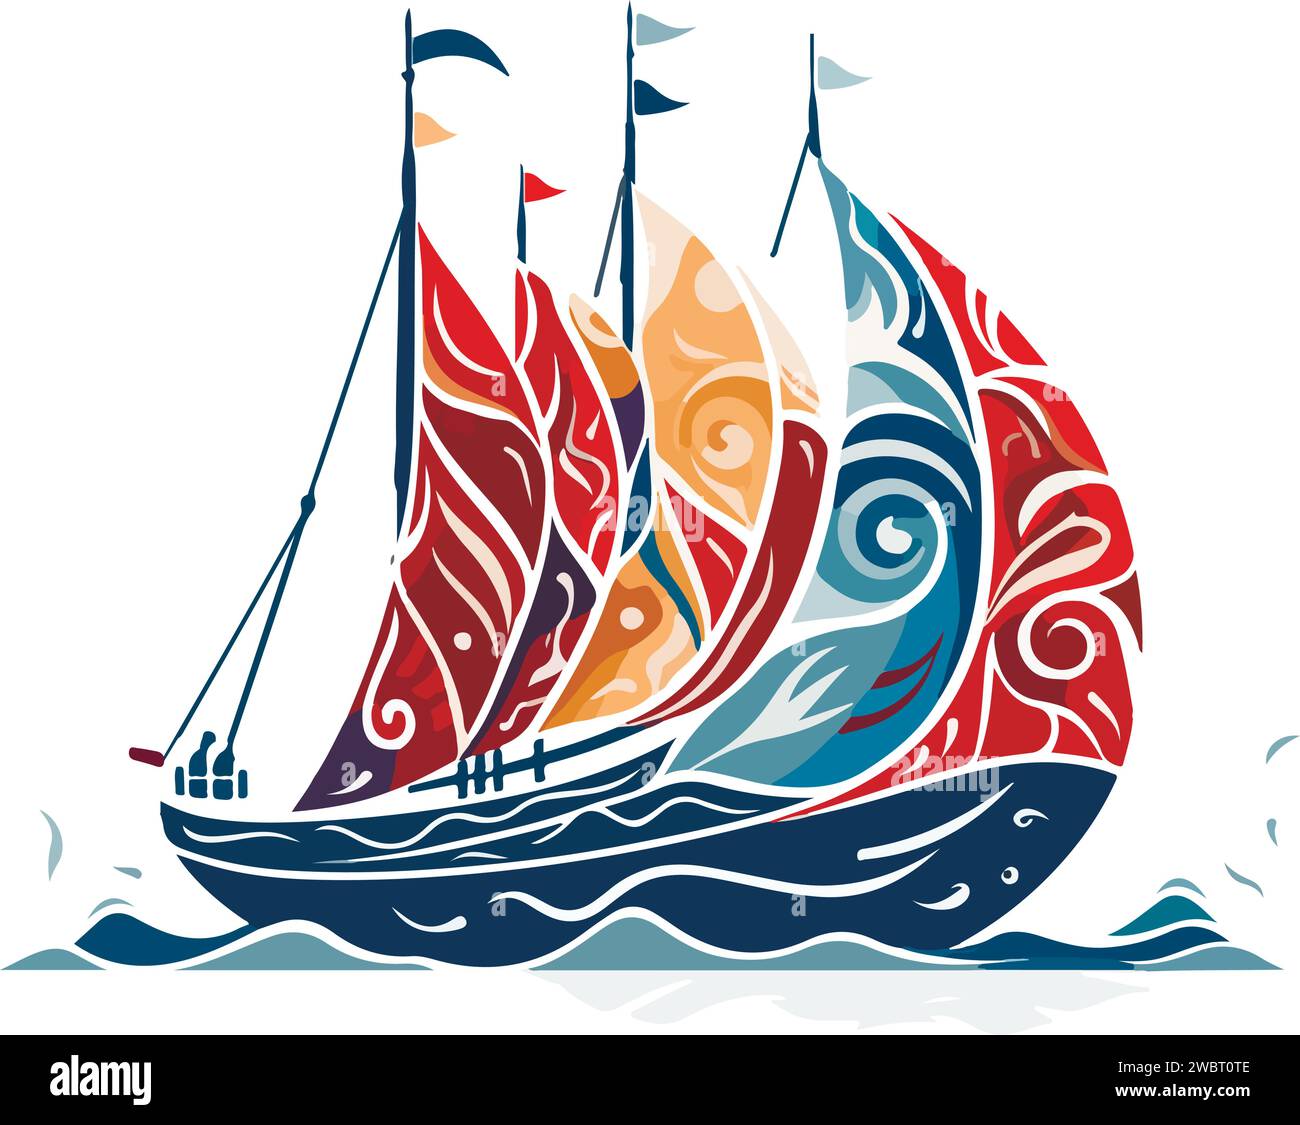 Vector ornamental ancient sailboat illustration. Abstract historical mythology ship logo. Good for print or tattoo. Stock Vector